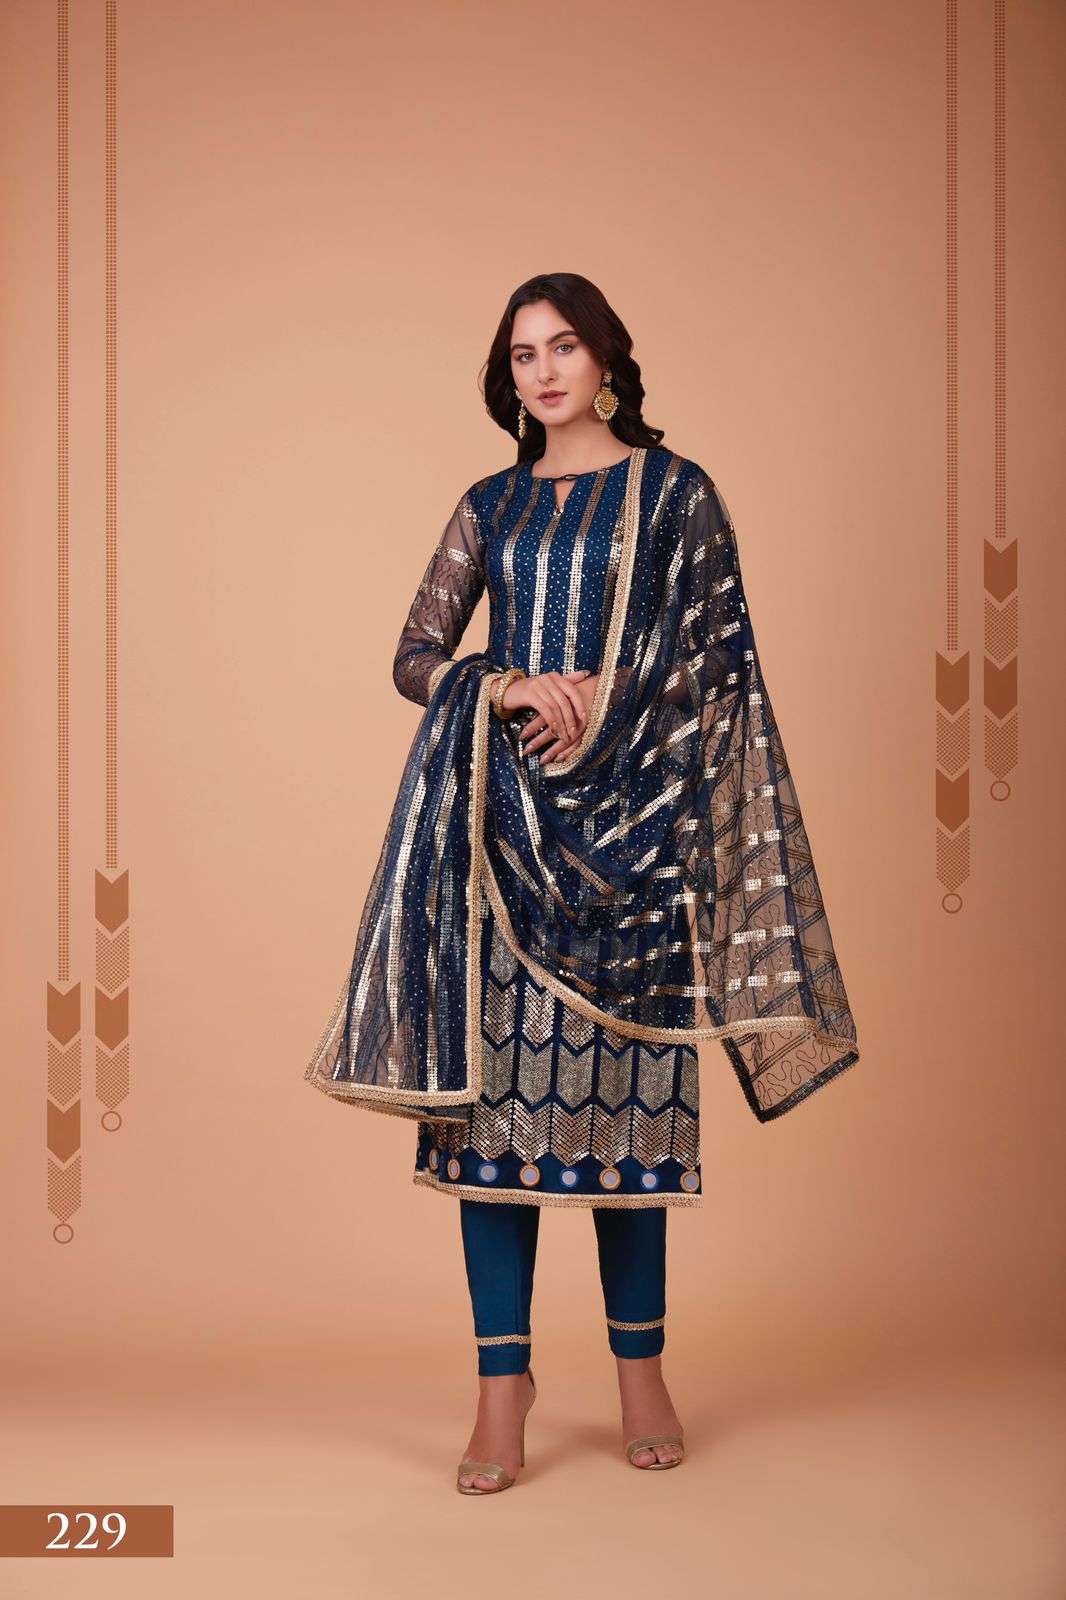 Zehra Vol-3 By Narayani Fashion Hub 229 To 232 Series Beautiful Suits Colorful Stylish Fancy Casual Wear & Ethnic Wear Mono Net Dresses At Wholesale Price